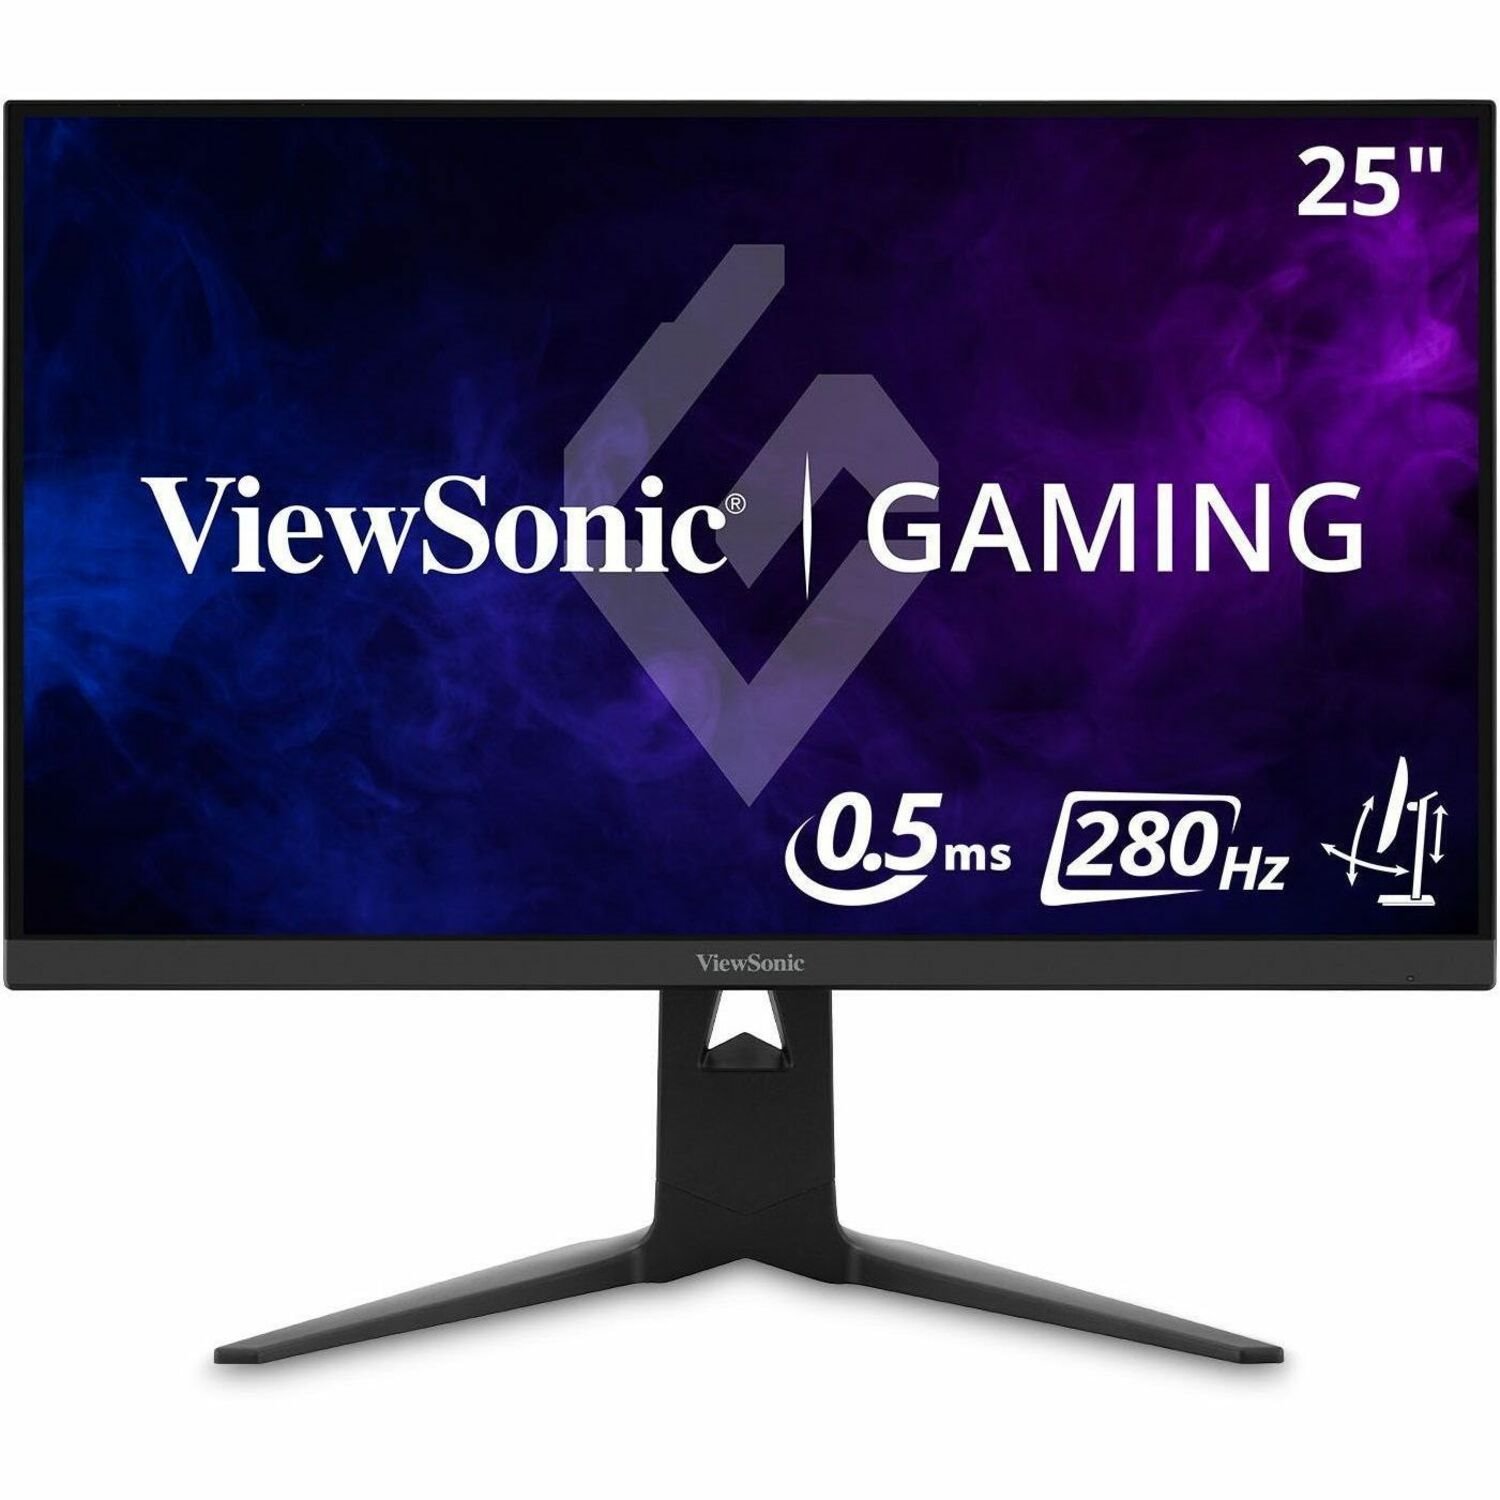 ViewSonic XG2536 25" Class Full HD Gaming LED Monitor - 16:9